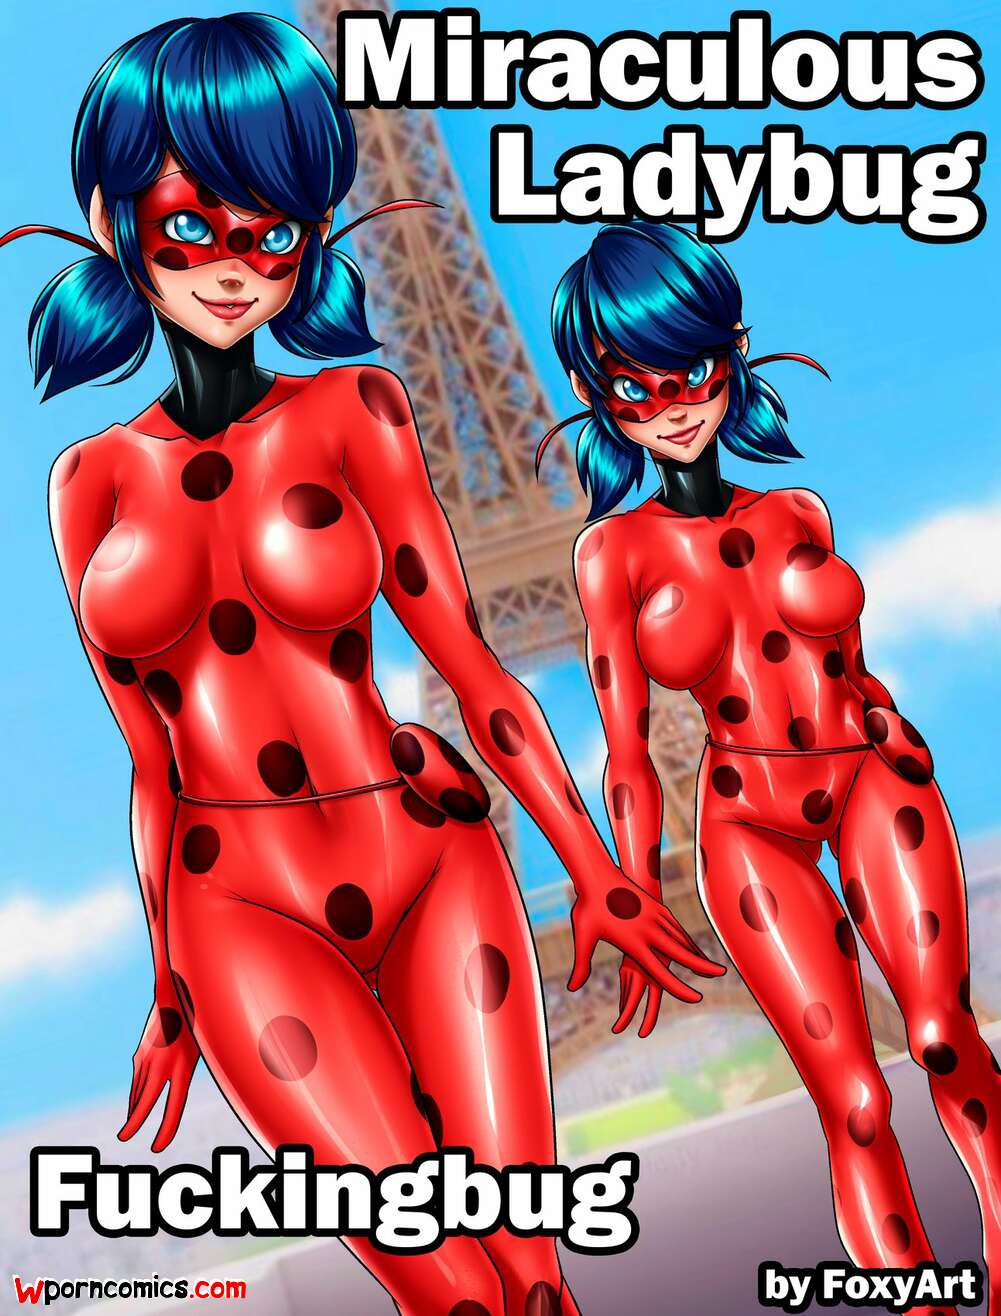 Ladybug porn comic